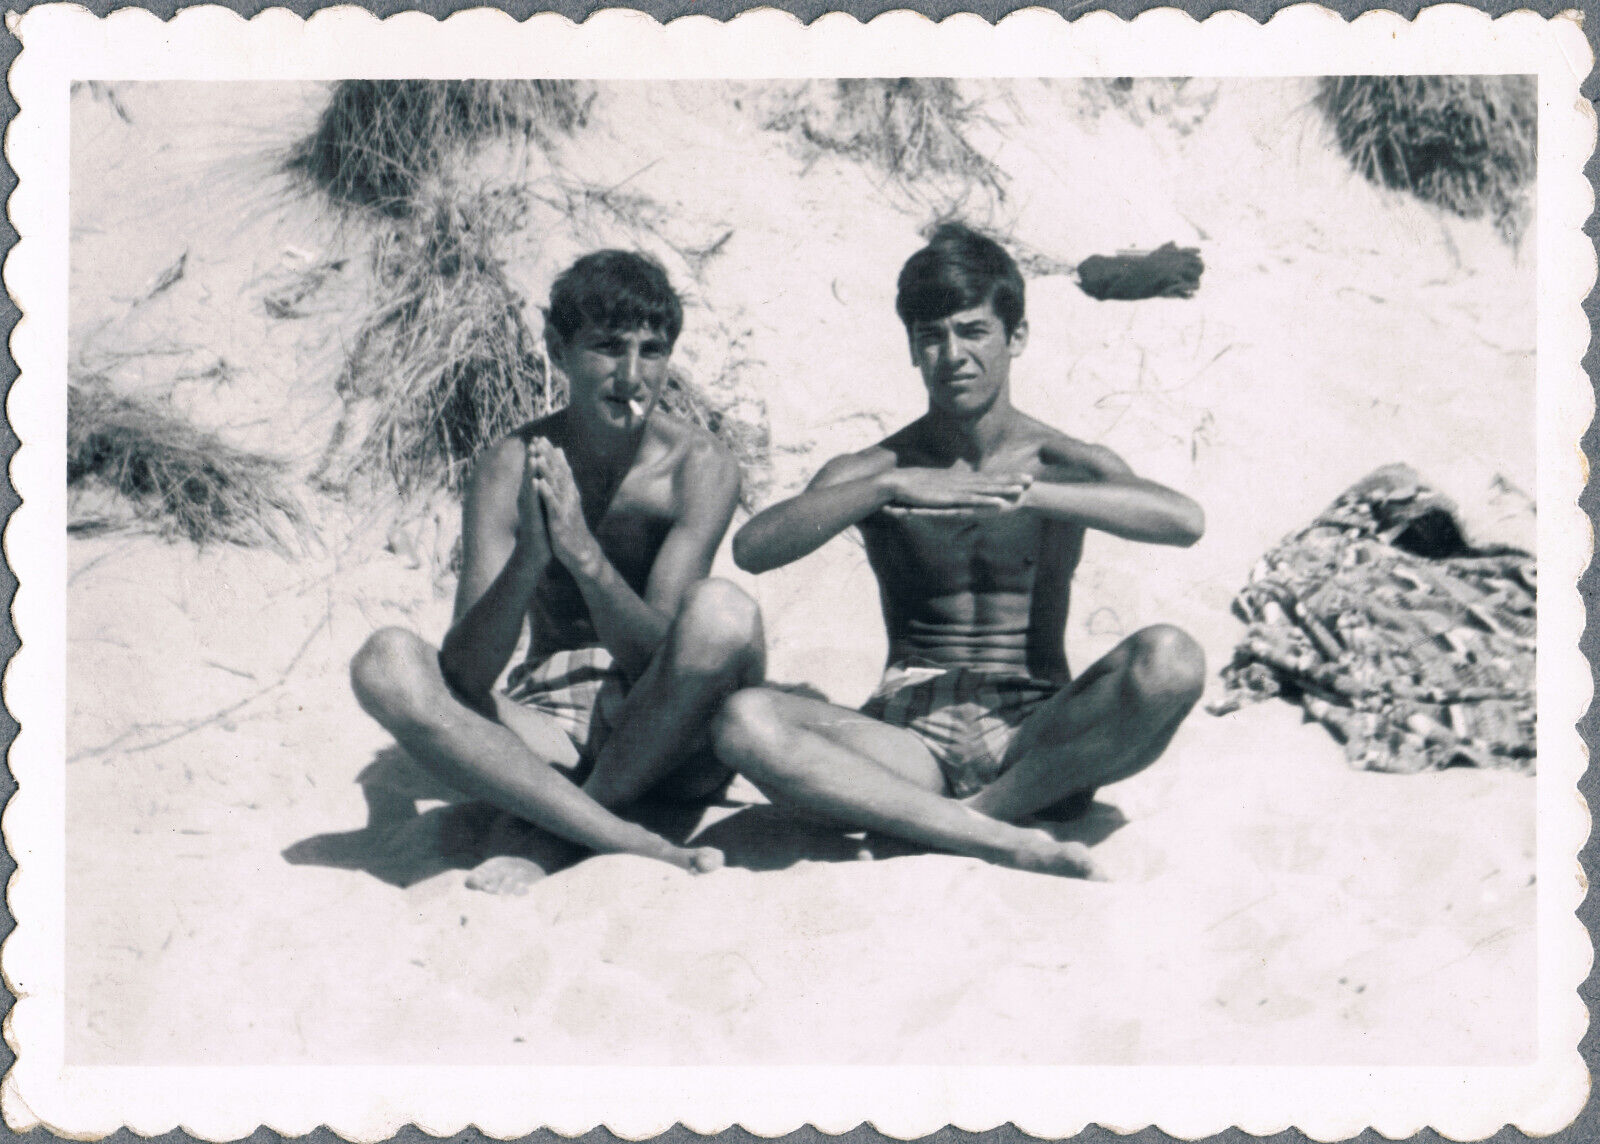 Shirtless Guys Trunks Bulge Muscle Affectionate Men Gay Interest Vintage Photo